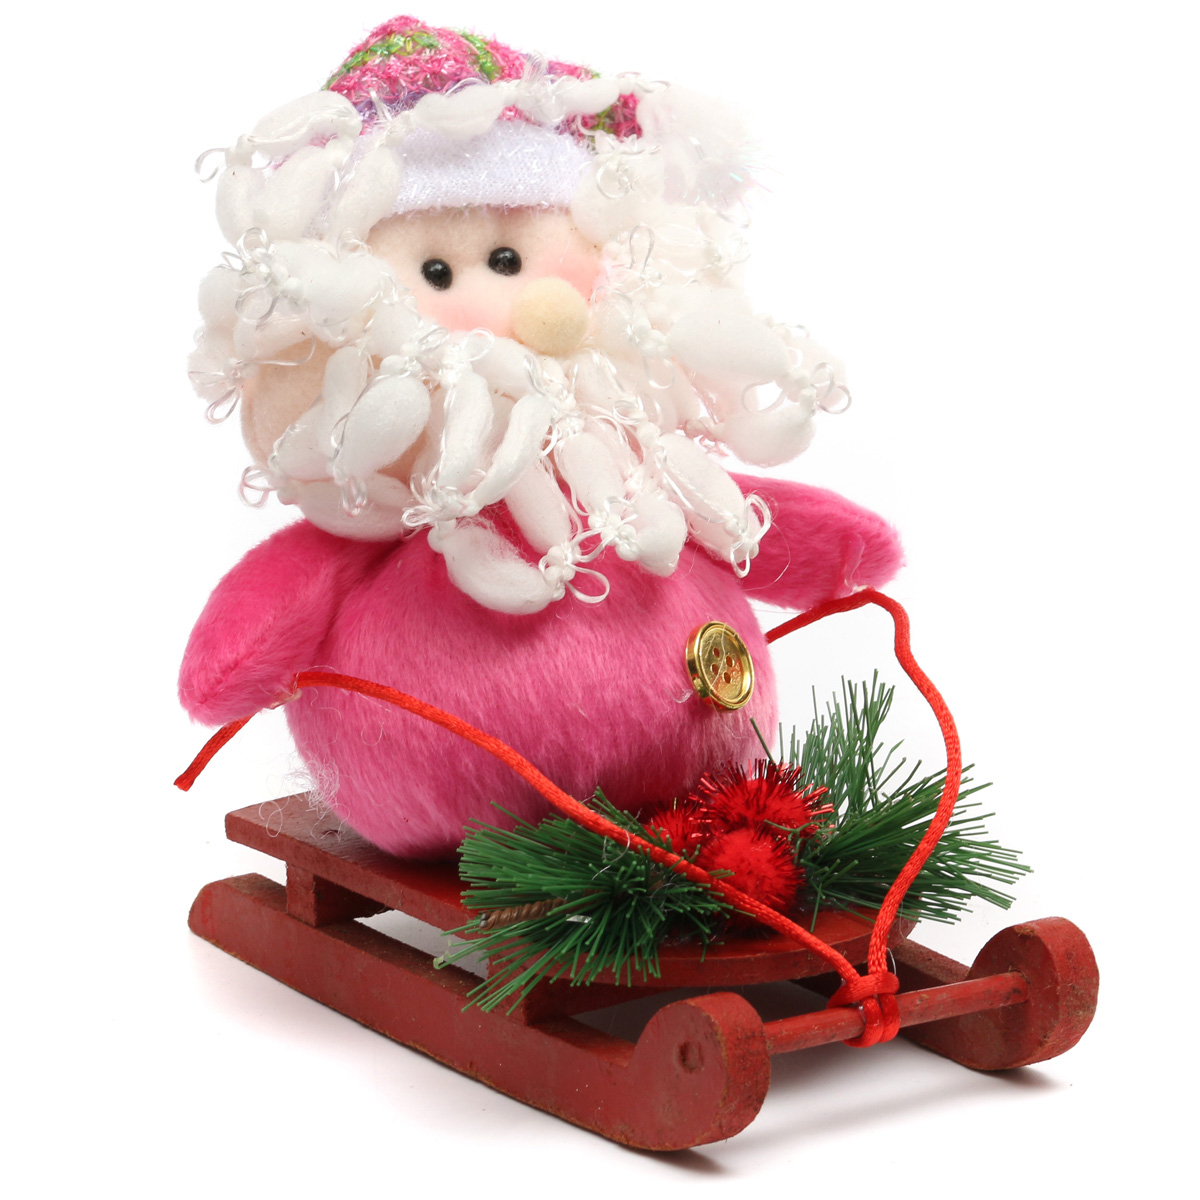 Christmas-Santa-Clau-Snowman-Sledding-Christmas-Party-Decor-1007468-4